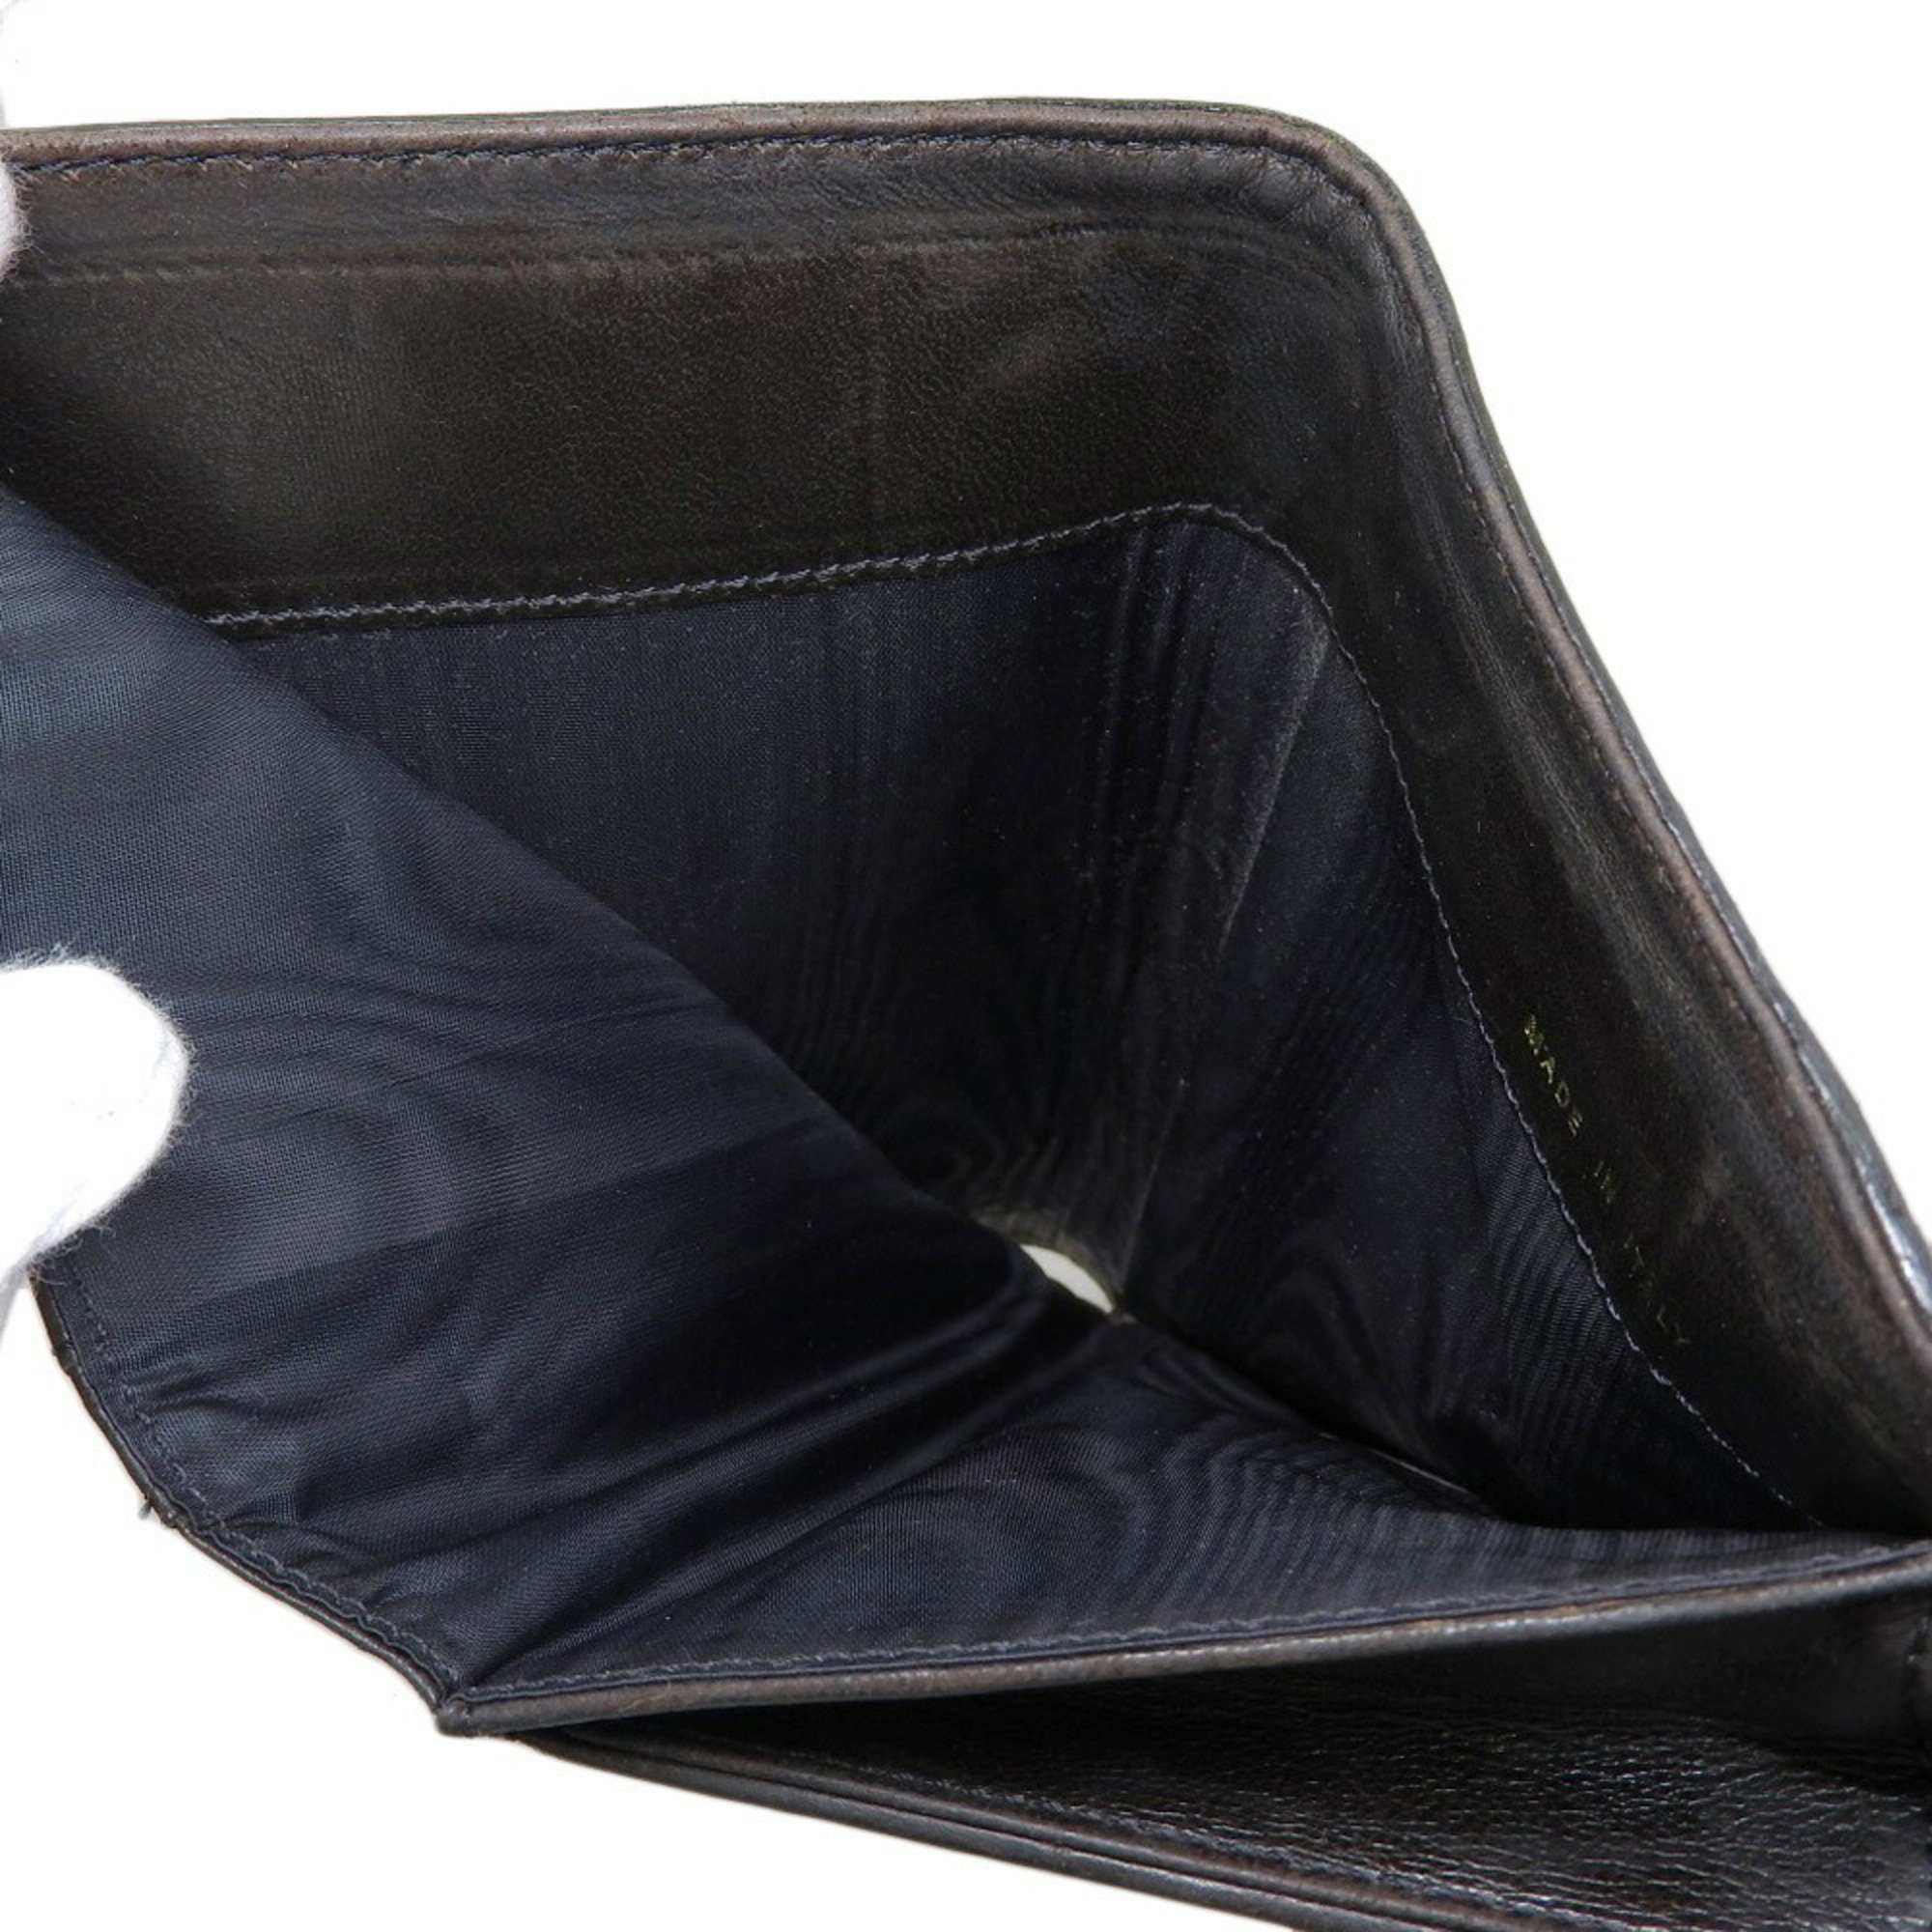 Chanel CHANEL here mark tri-fold wallet caviar skin black 5 series